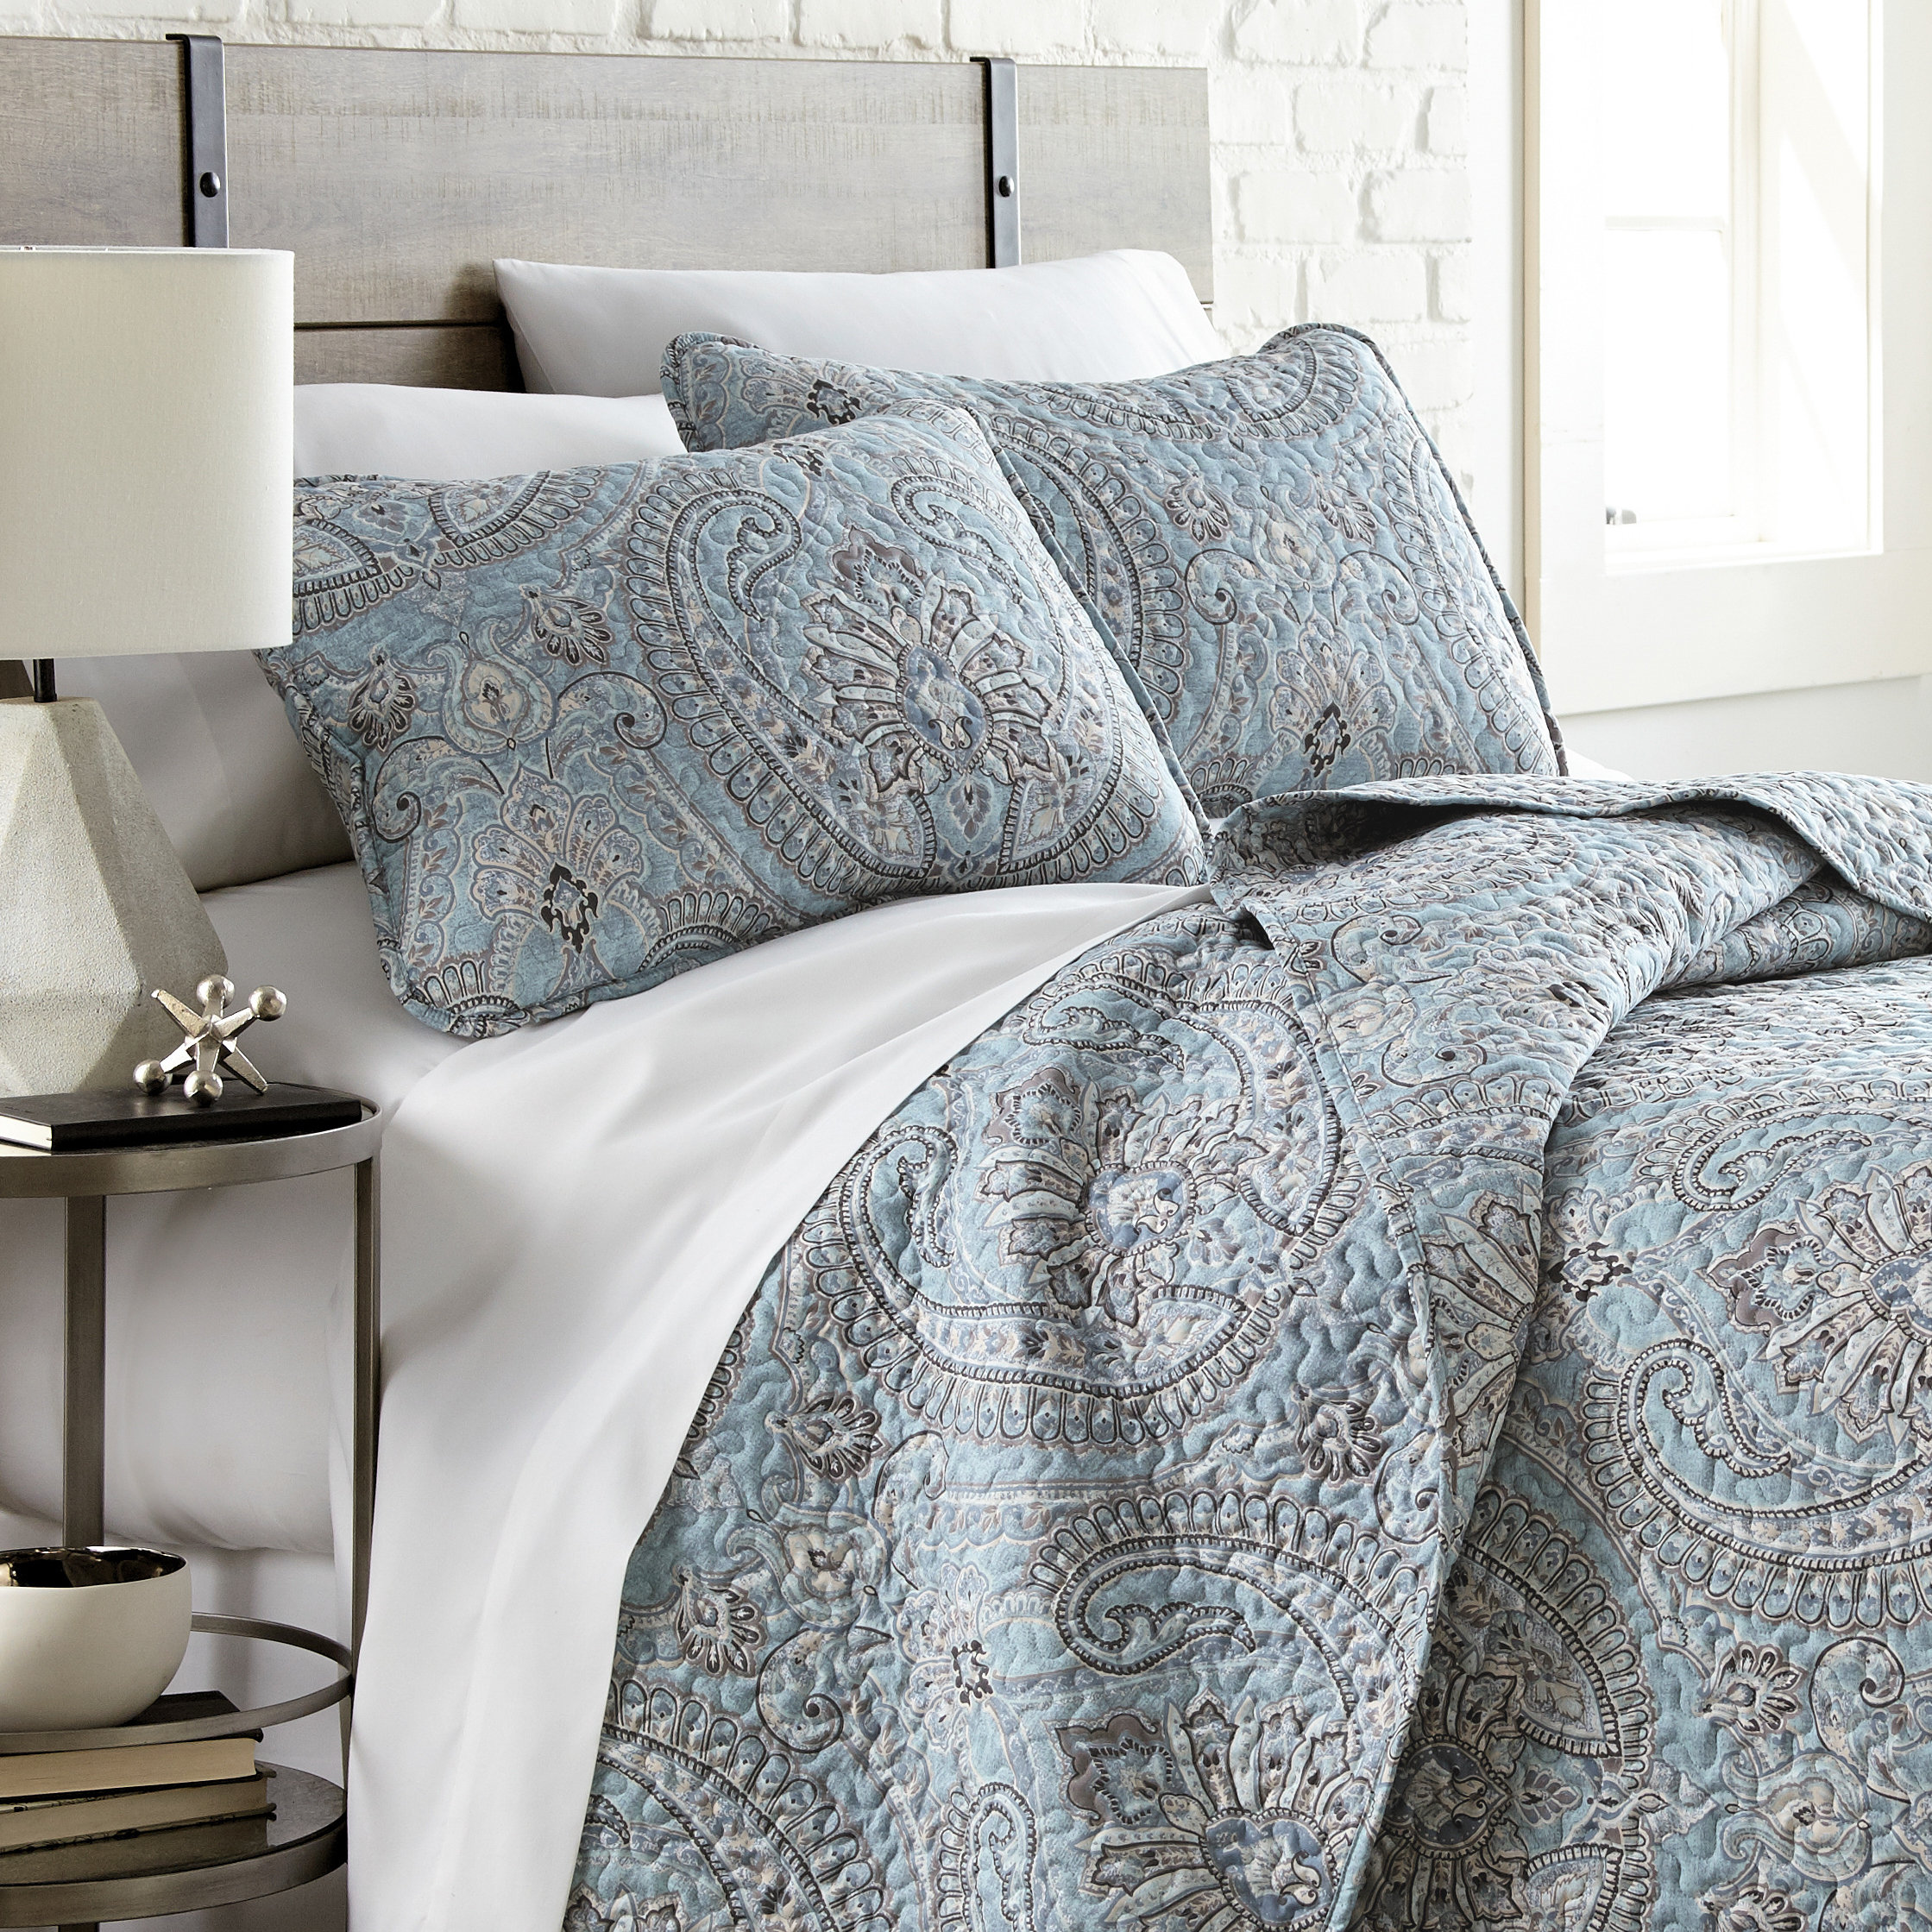 Details about   Premium Medallion Reversible Bedspread Coverlet Quilt Set 3-Piece Bed Cover 